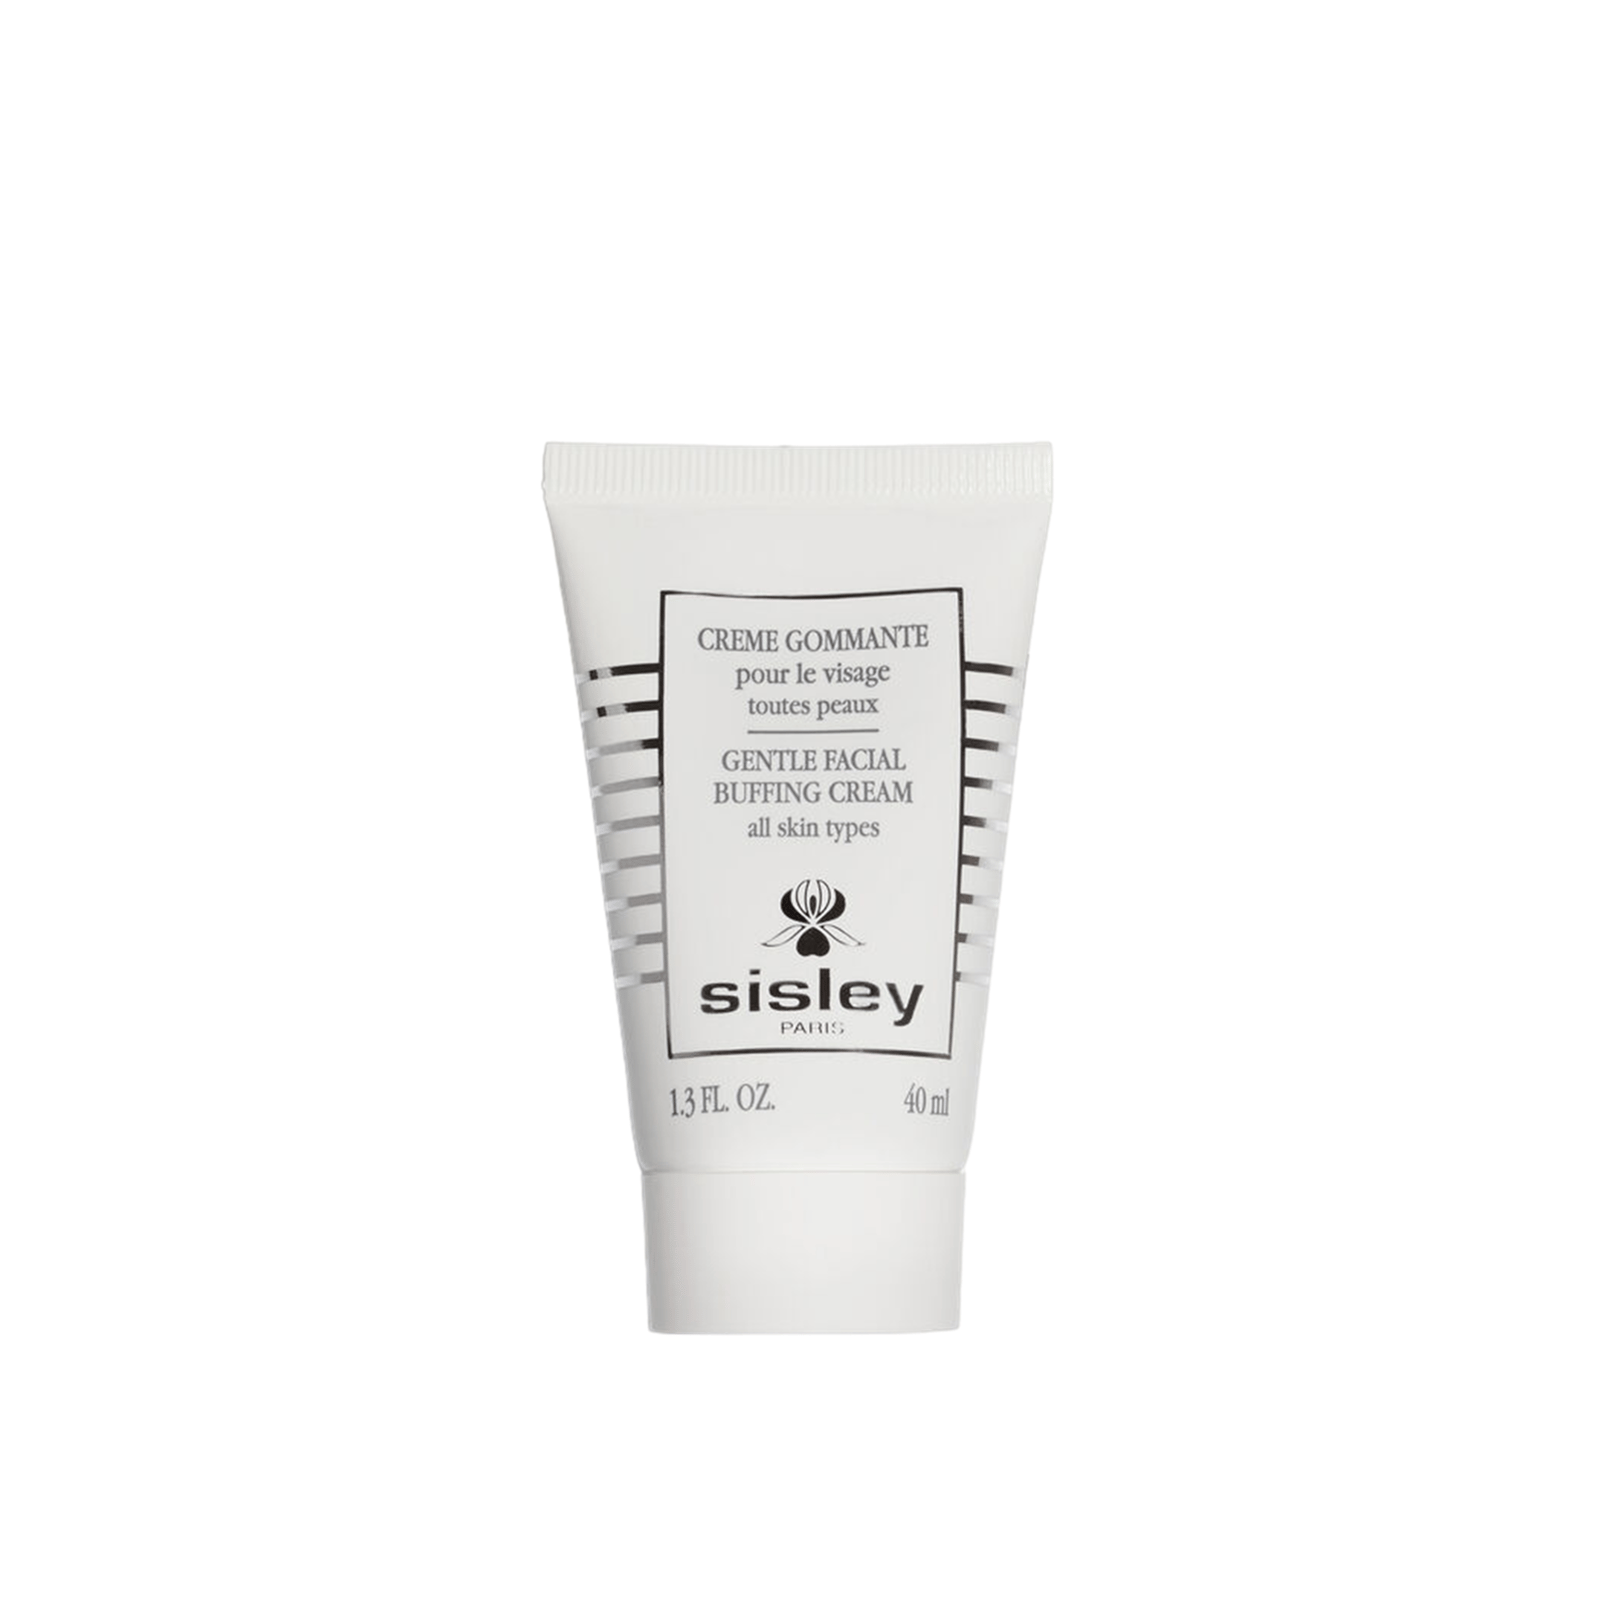 Sisley Paris Gentle Facial Buffing Cream 40ml (1.3floz)